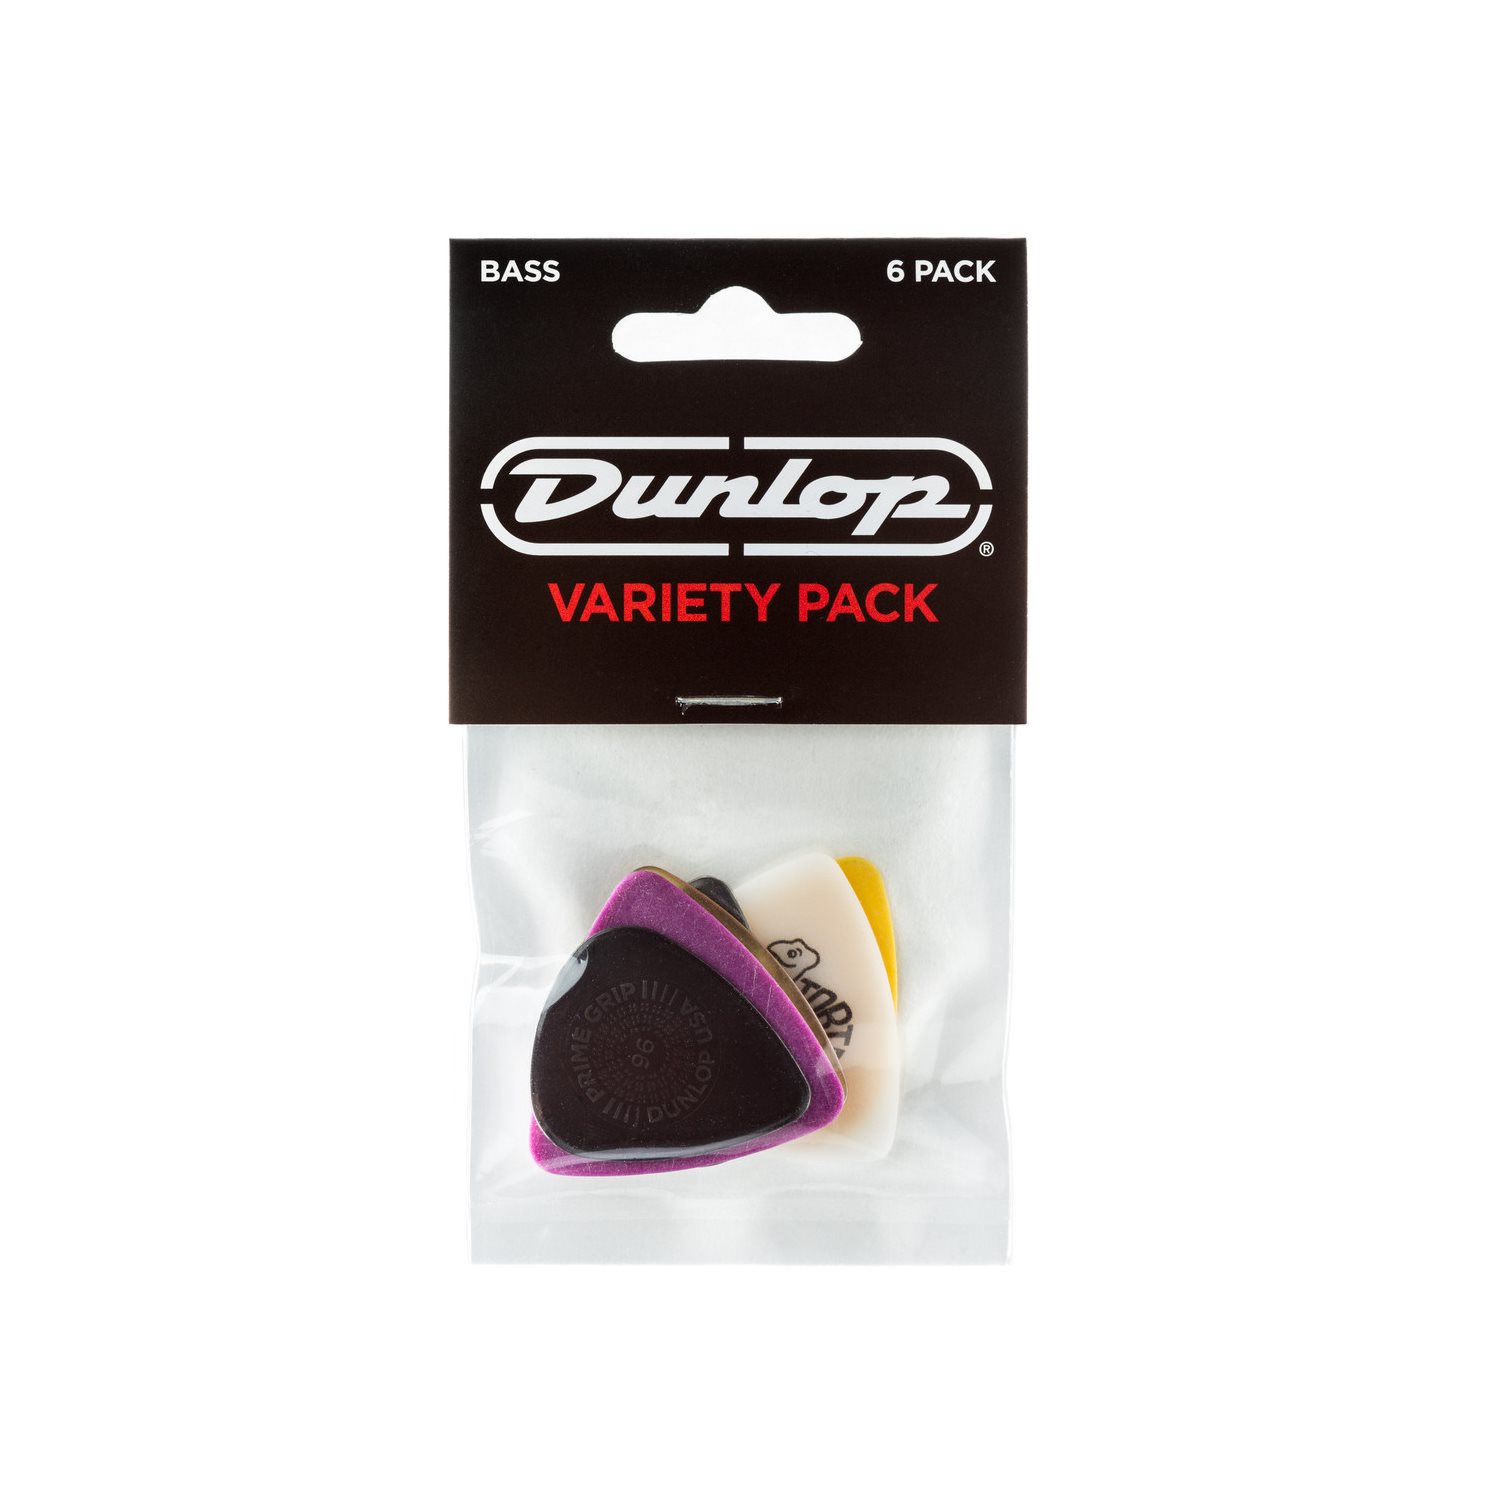 DUNLOP - PVP117 - BASS PICK VARIETY PACK - 12 pack